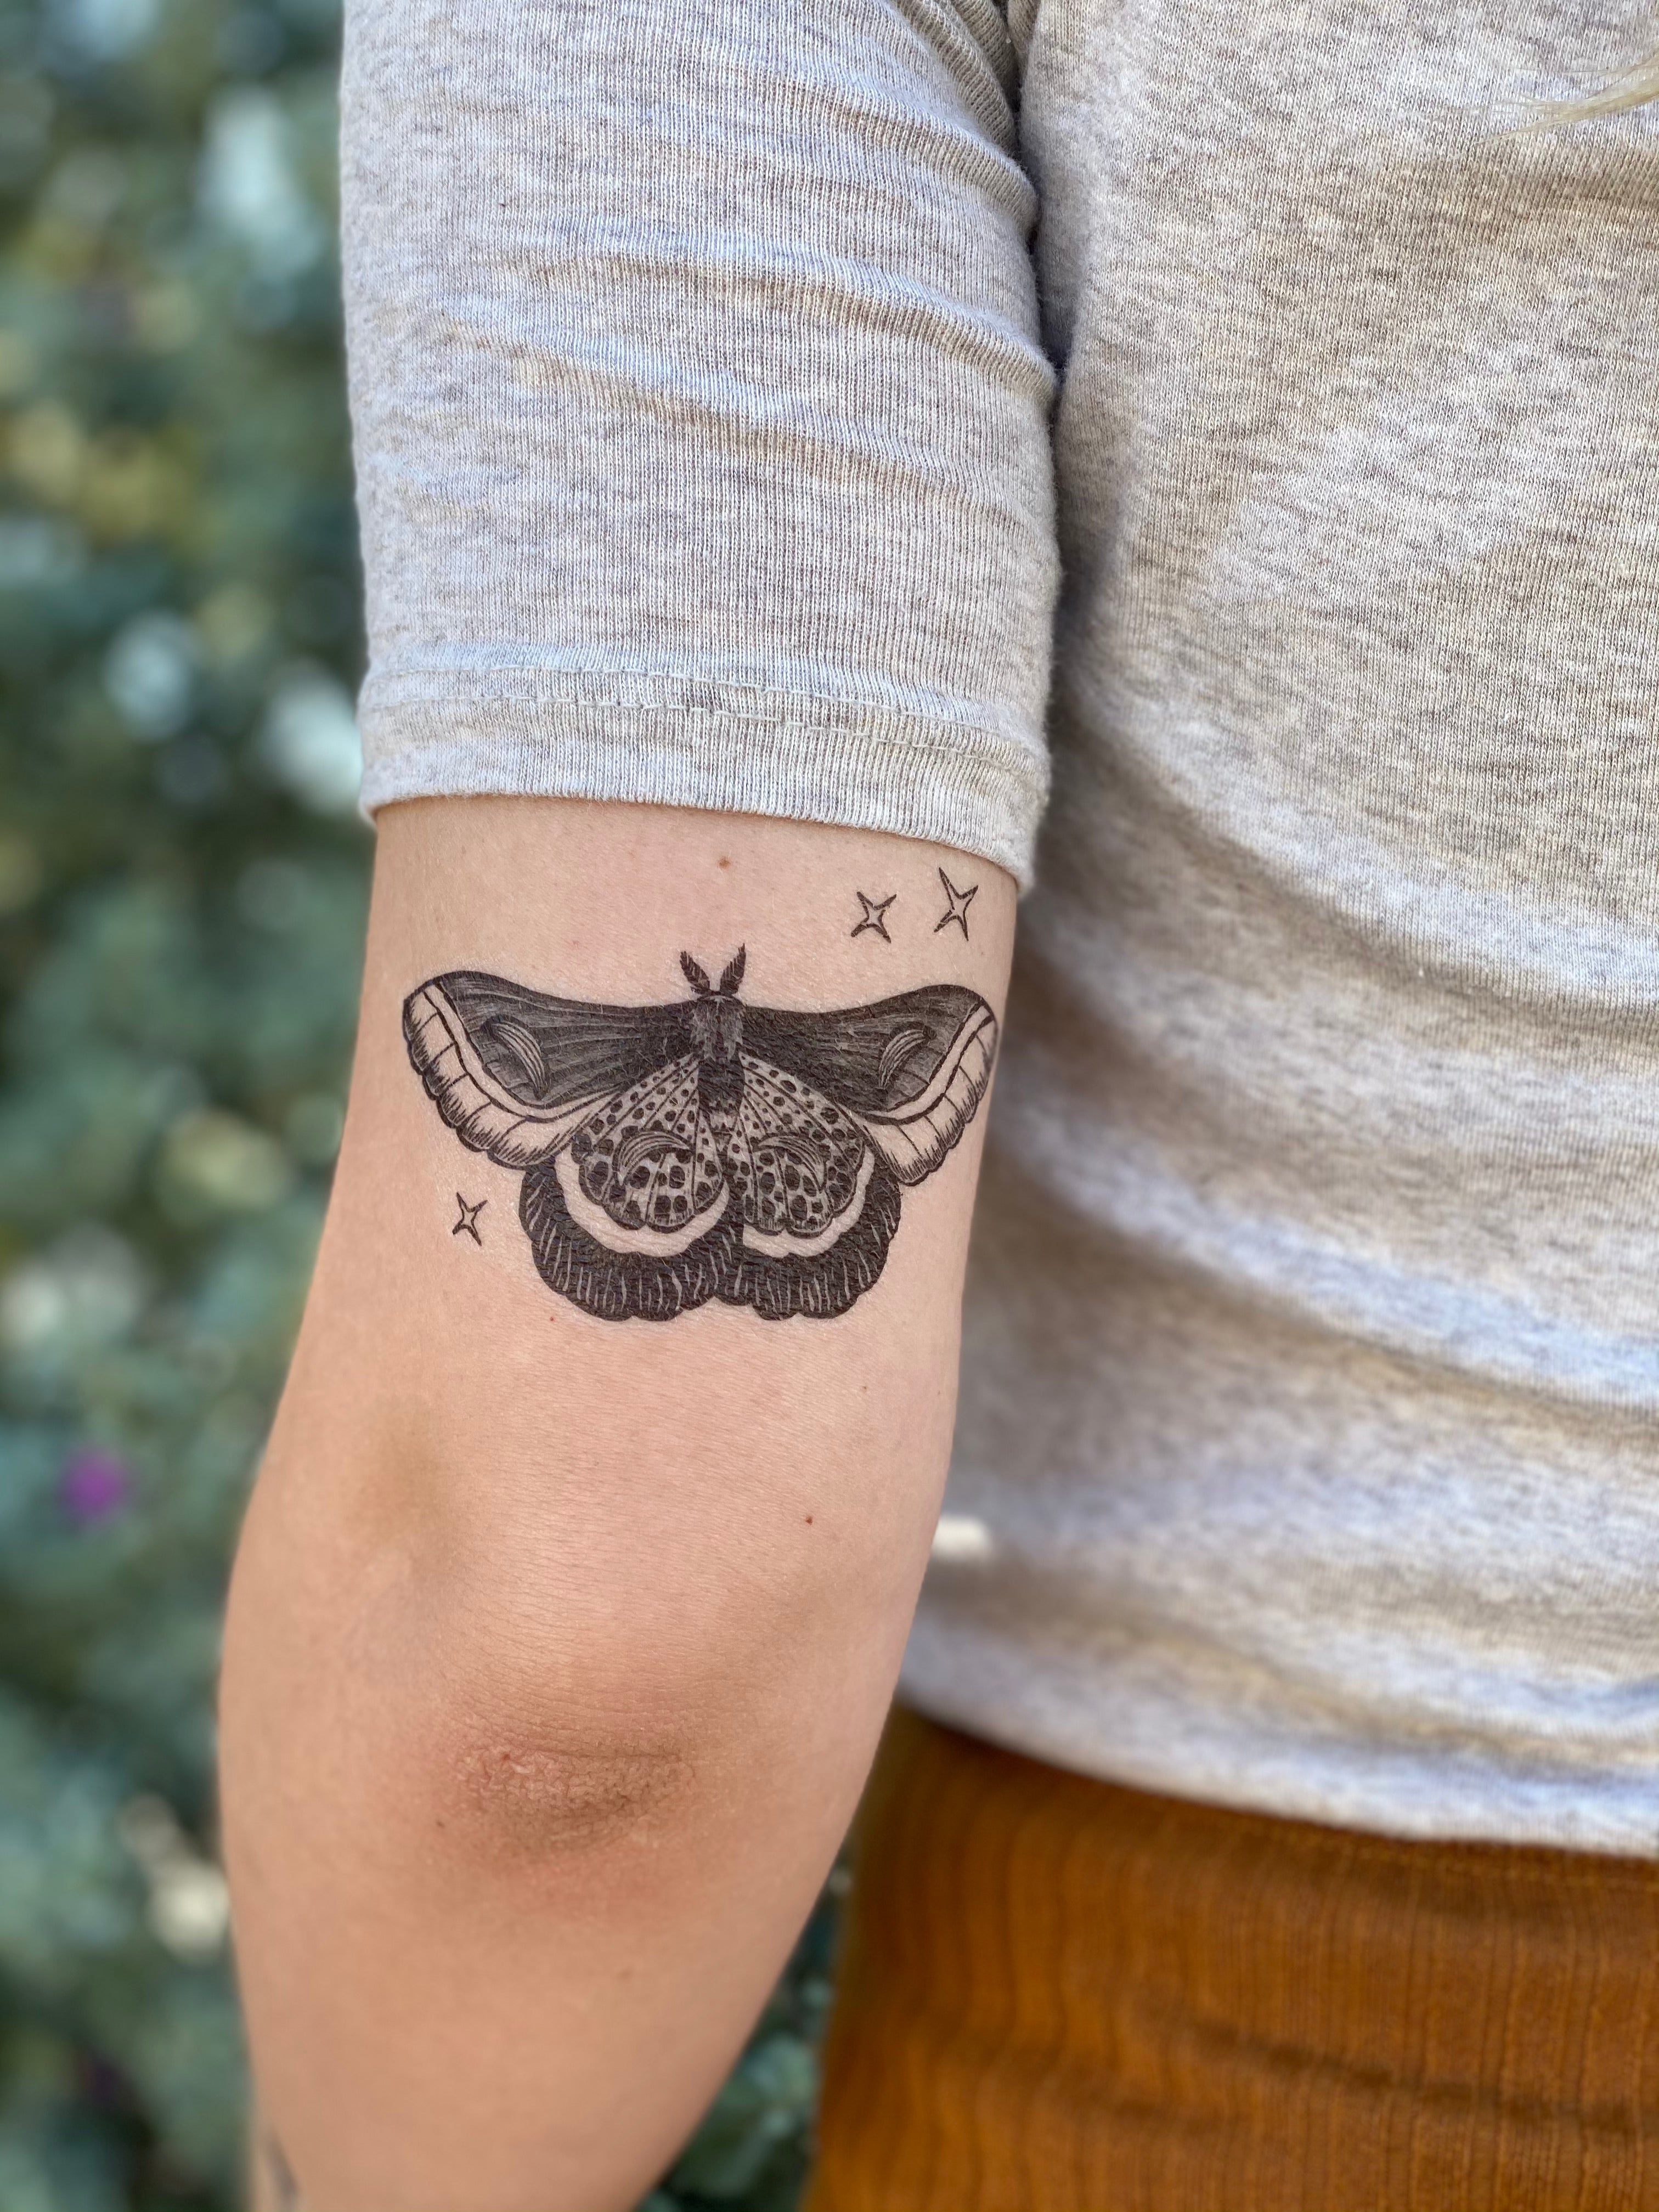 Cool  CreepyCrawly Bug Tattoos  Tattoo Ideas Artists and Models